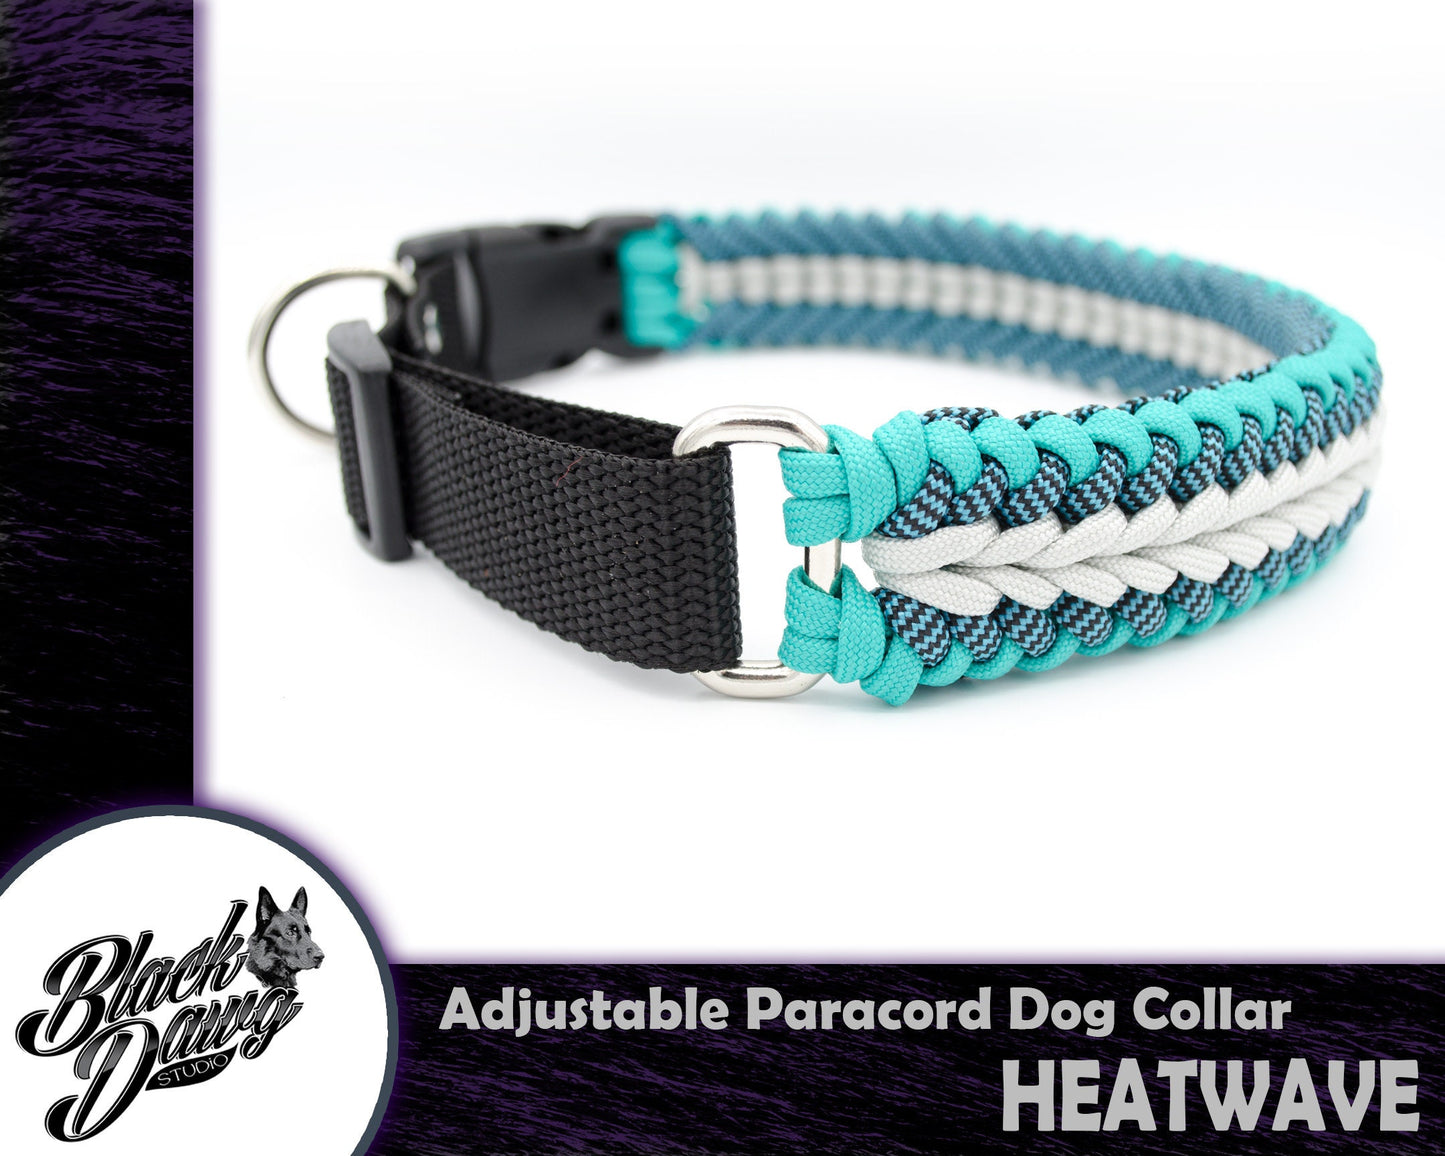 Heatwave Design 20-22-inch Adjustable Paracord Dog Collar - Teal, Shark Attack, Silver Grey